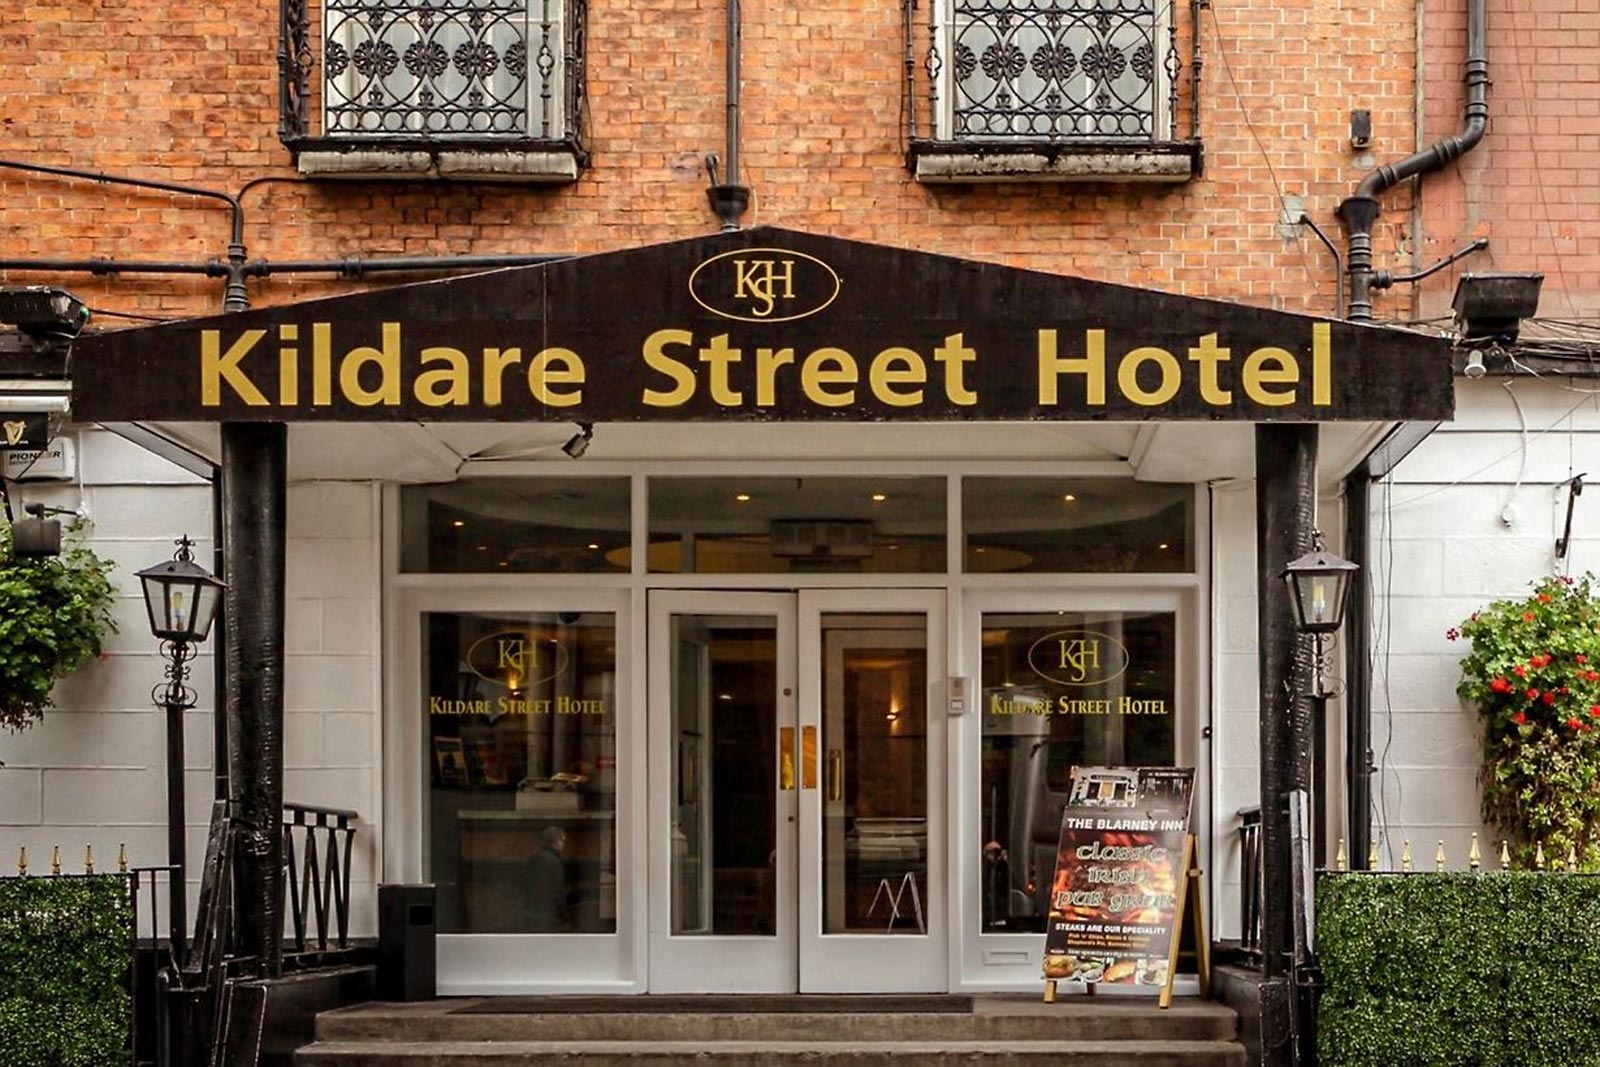 Best Budget Hotel in Dublin